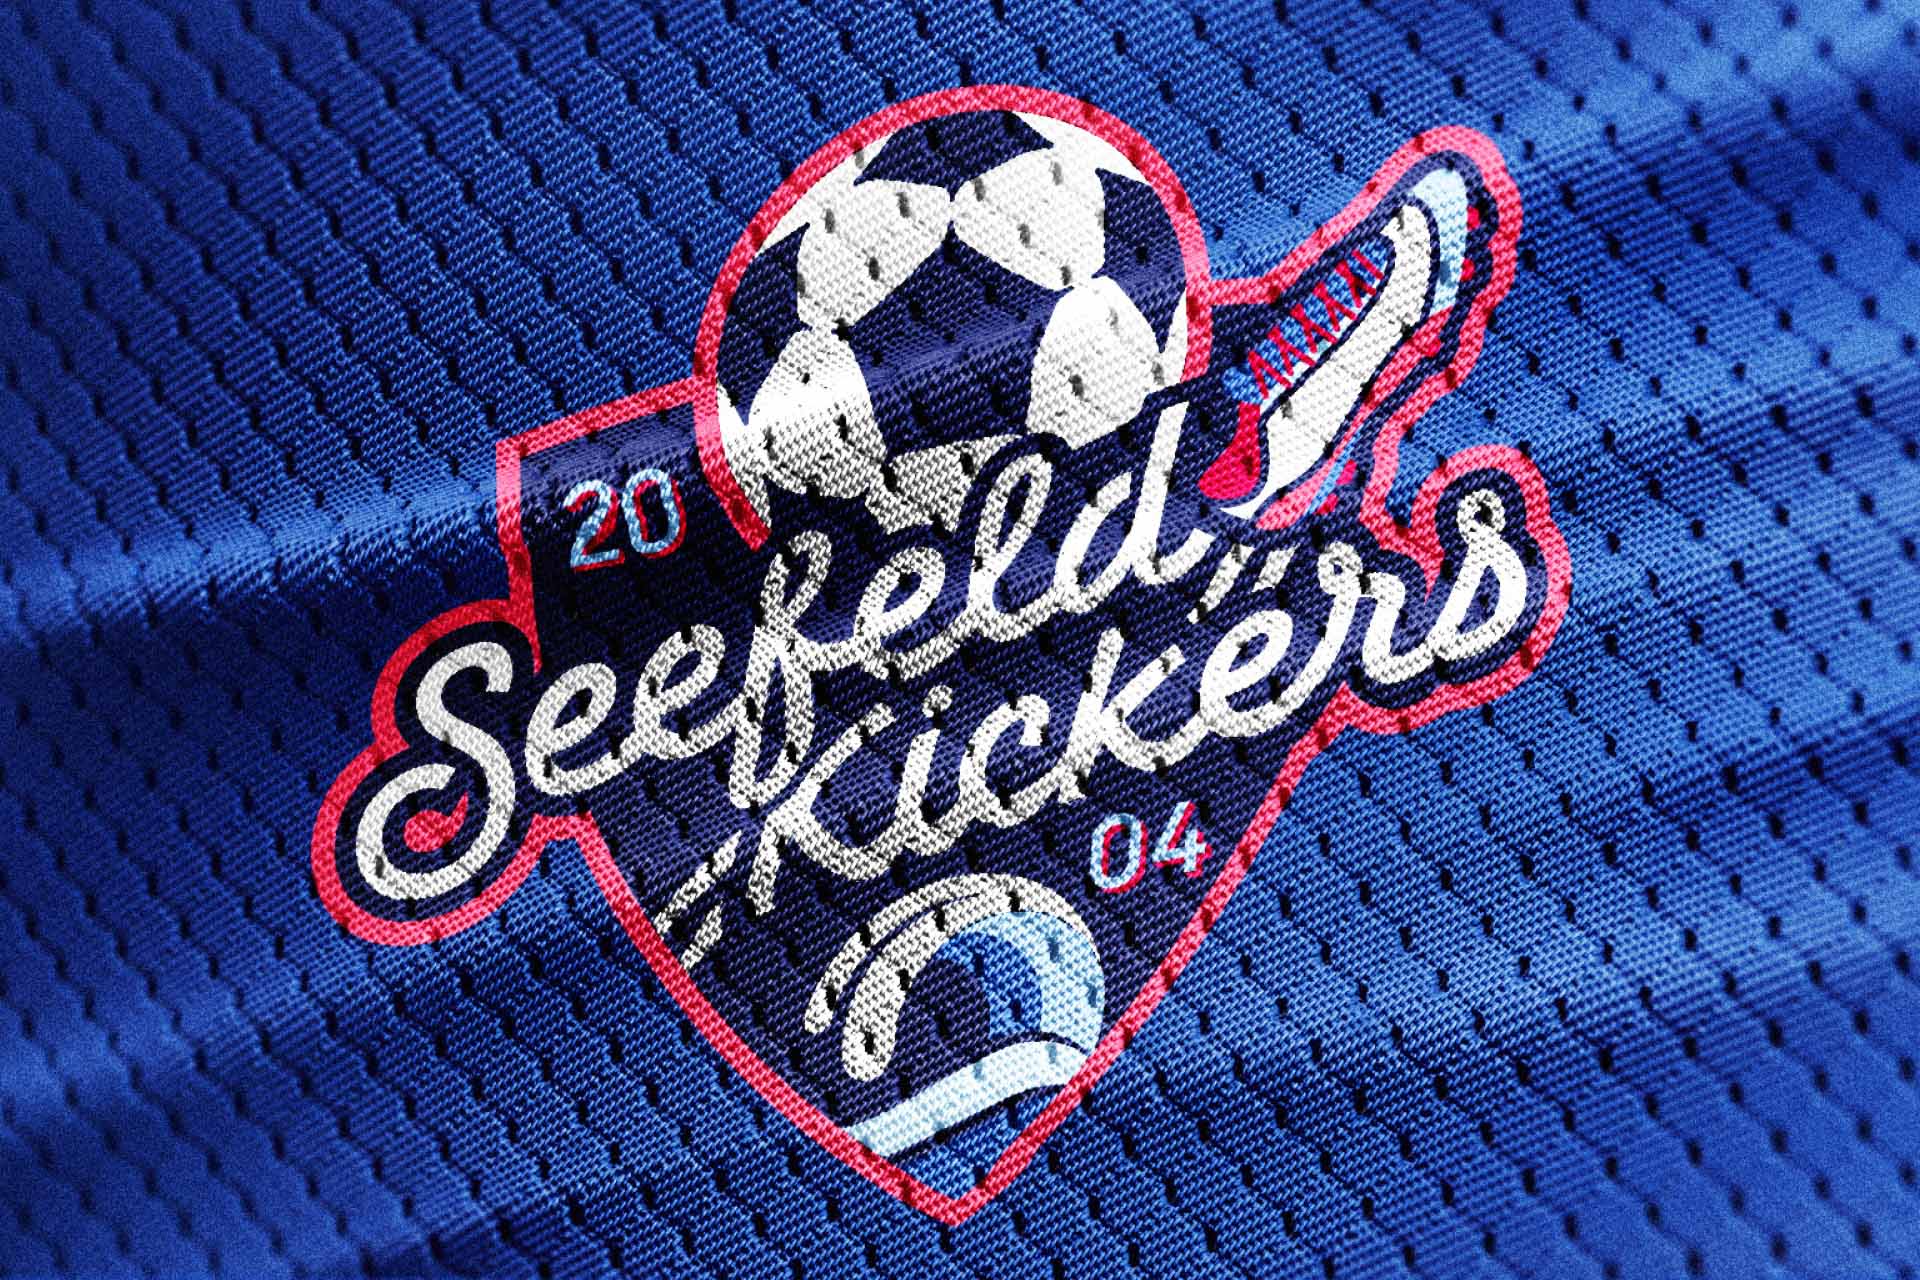 seefeldkickers logo design on fabric